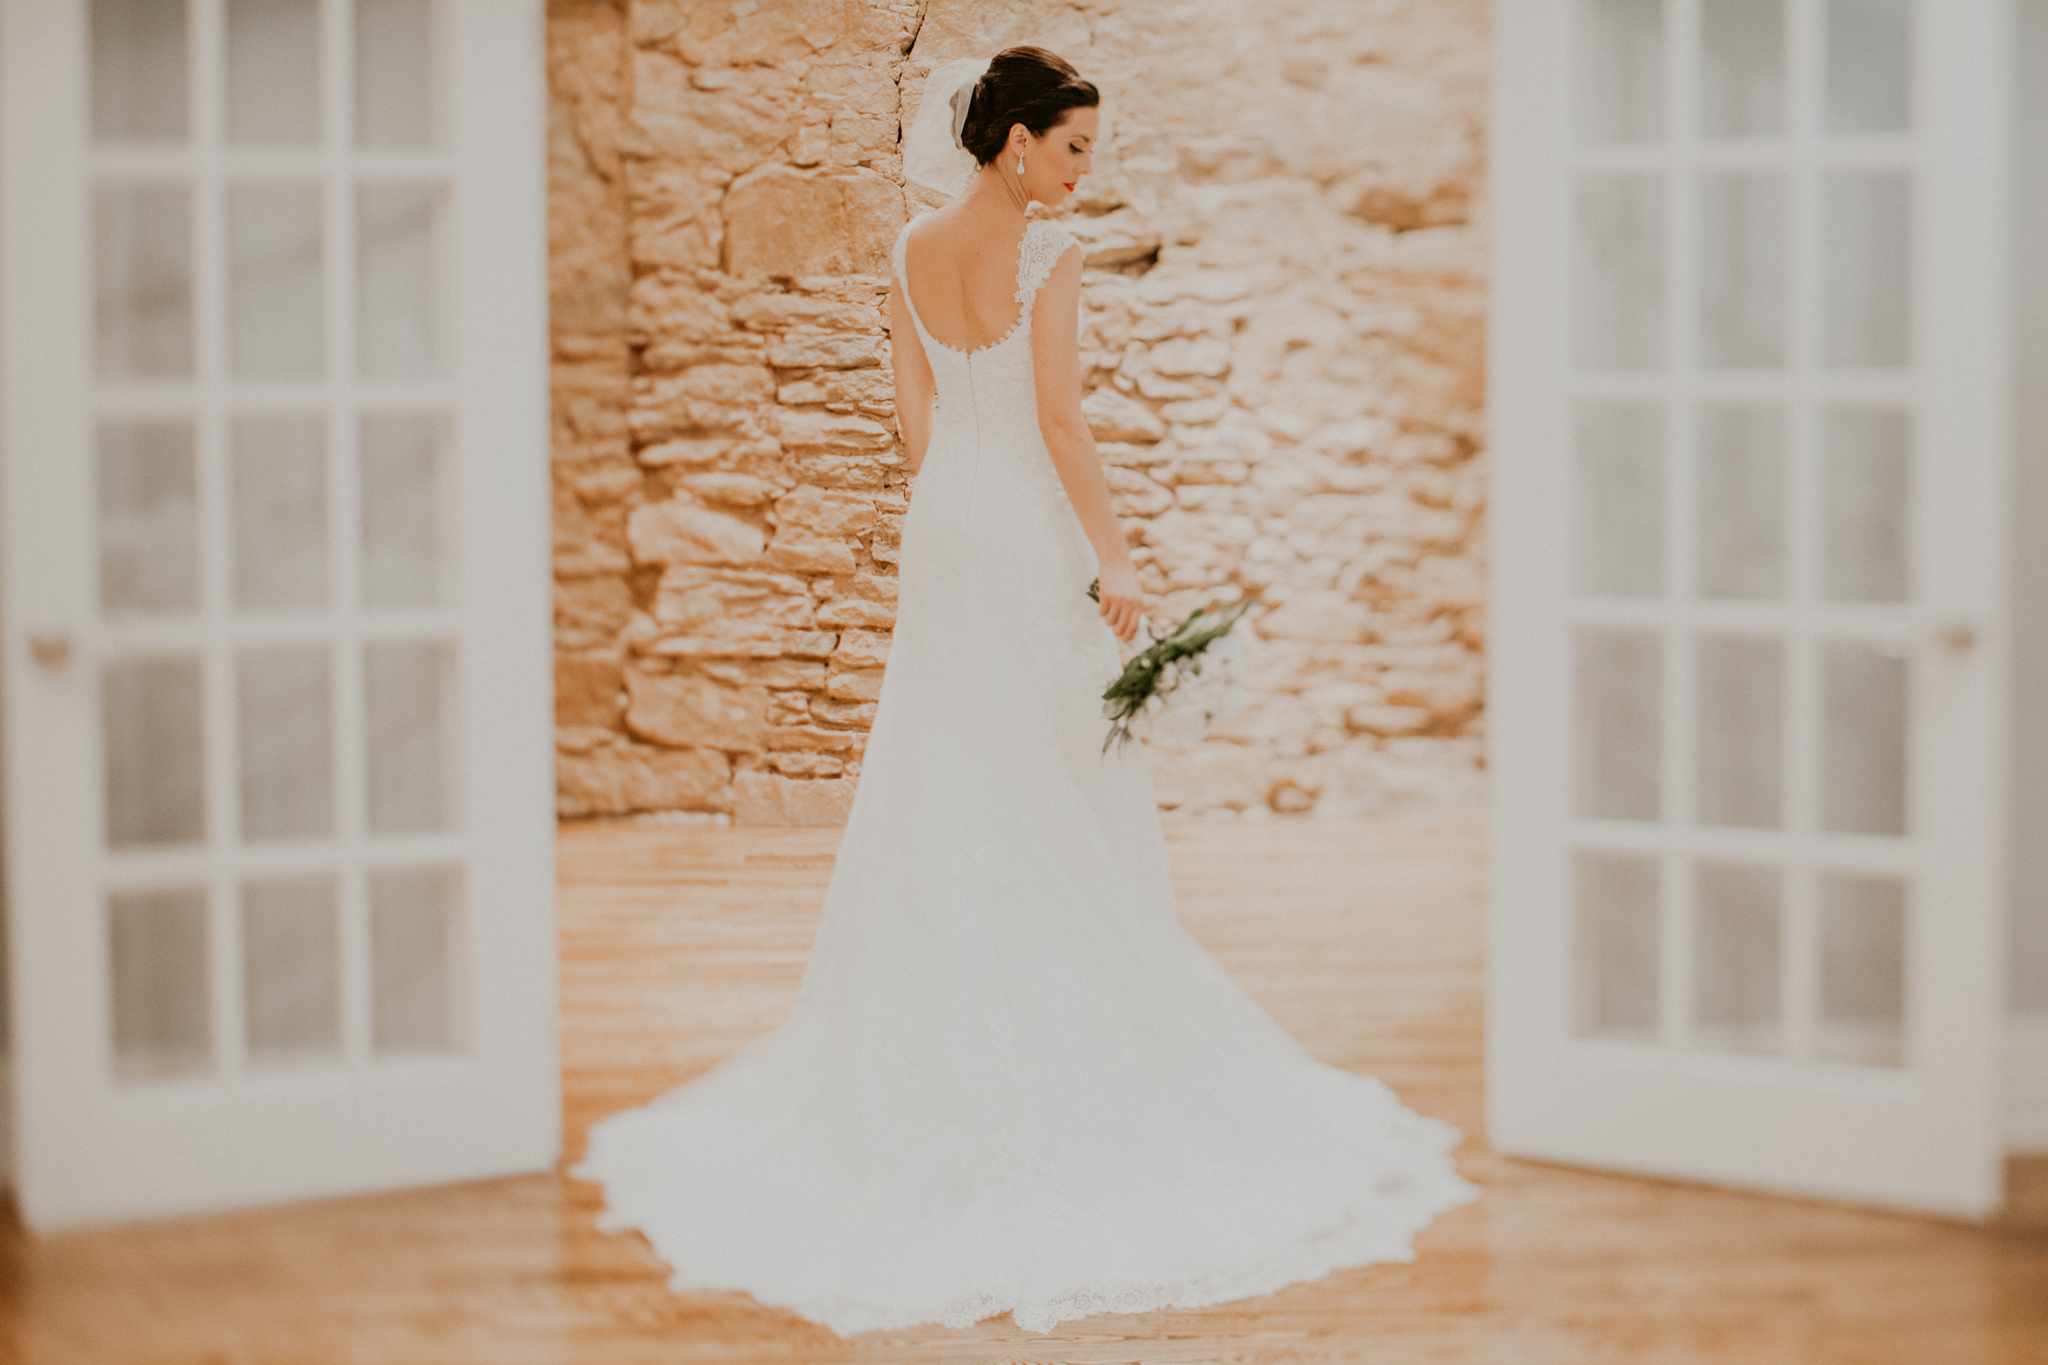 Portrait of bride in wedding dress framed by doorway